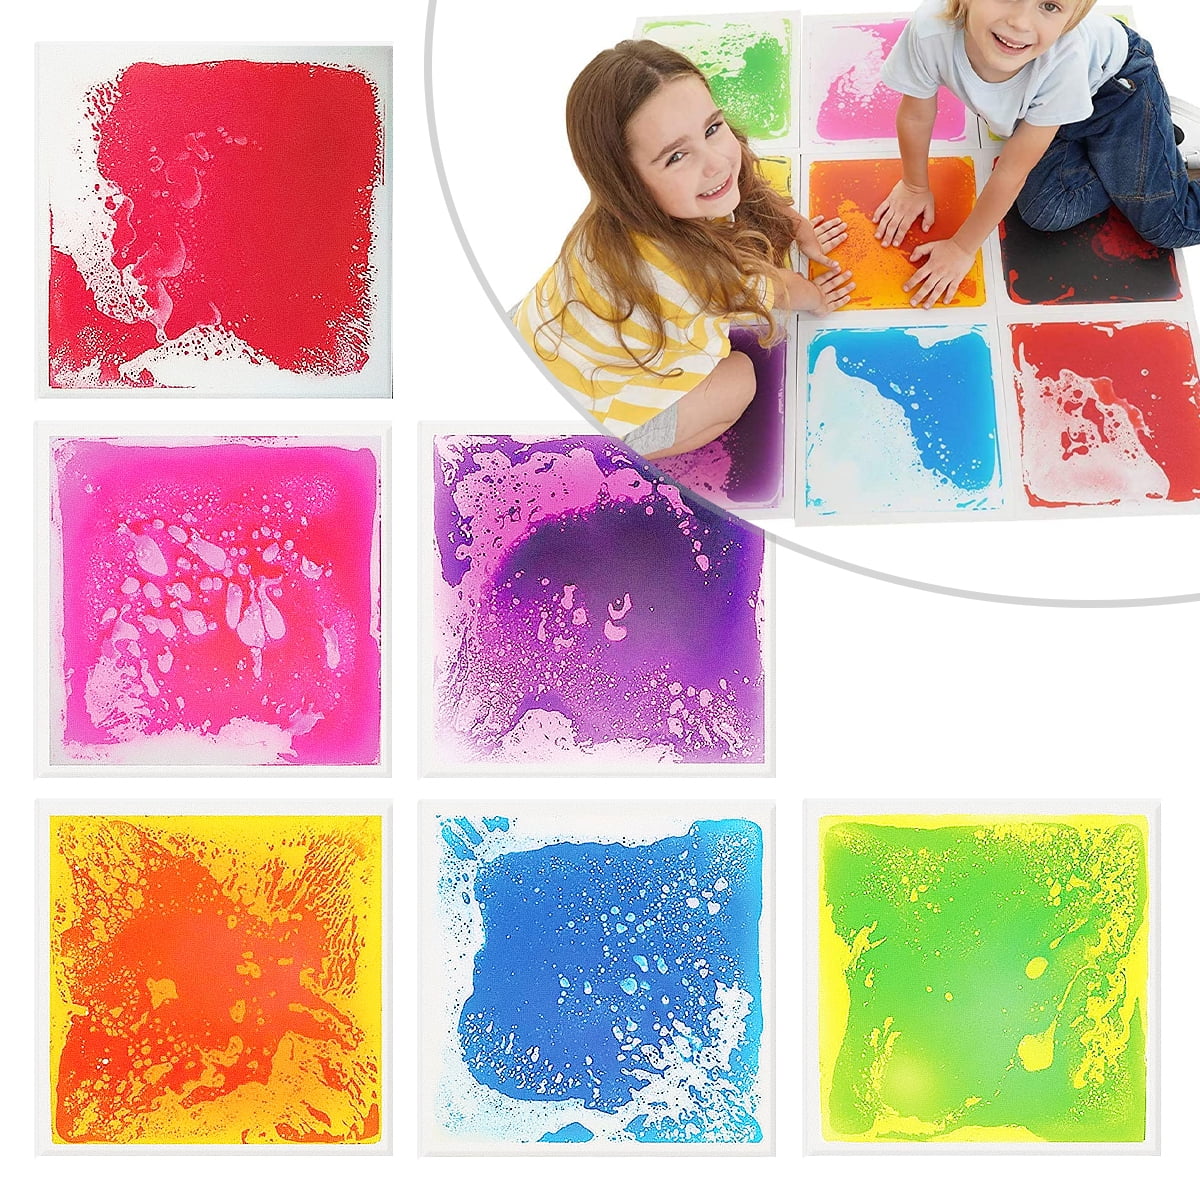 ShpilMaster QI004623.4 Sensory Liquid Gel Floor Square Tiles 19.5 x 19.5 inch Red/Orange Green/Yellow Pink/Purple Blue/White Kids Floor Mat 4 Pack